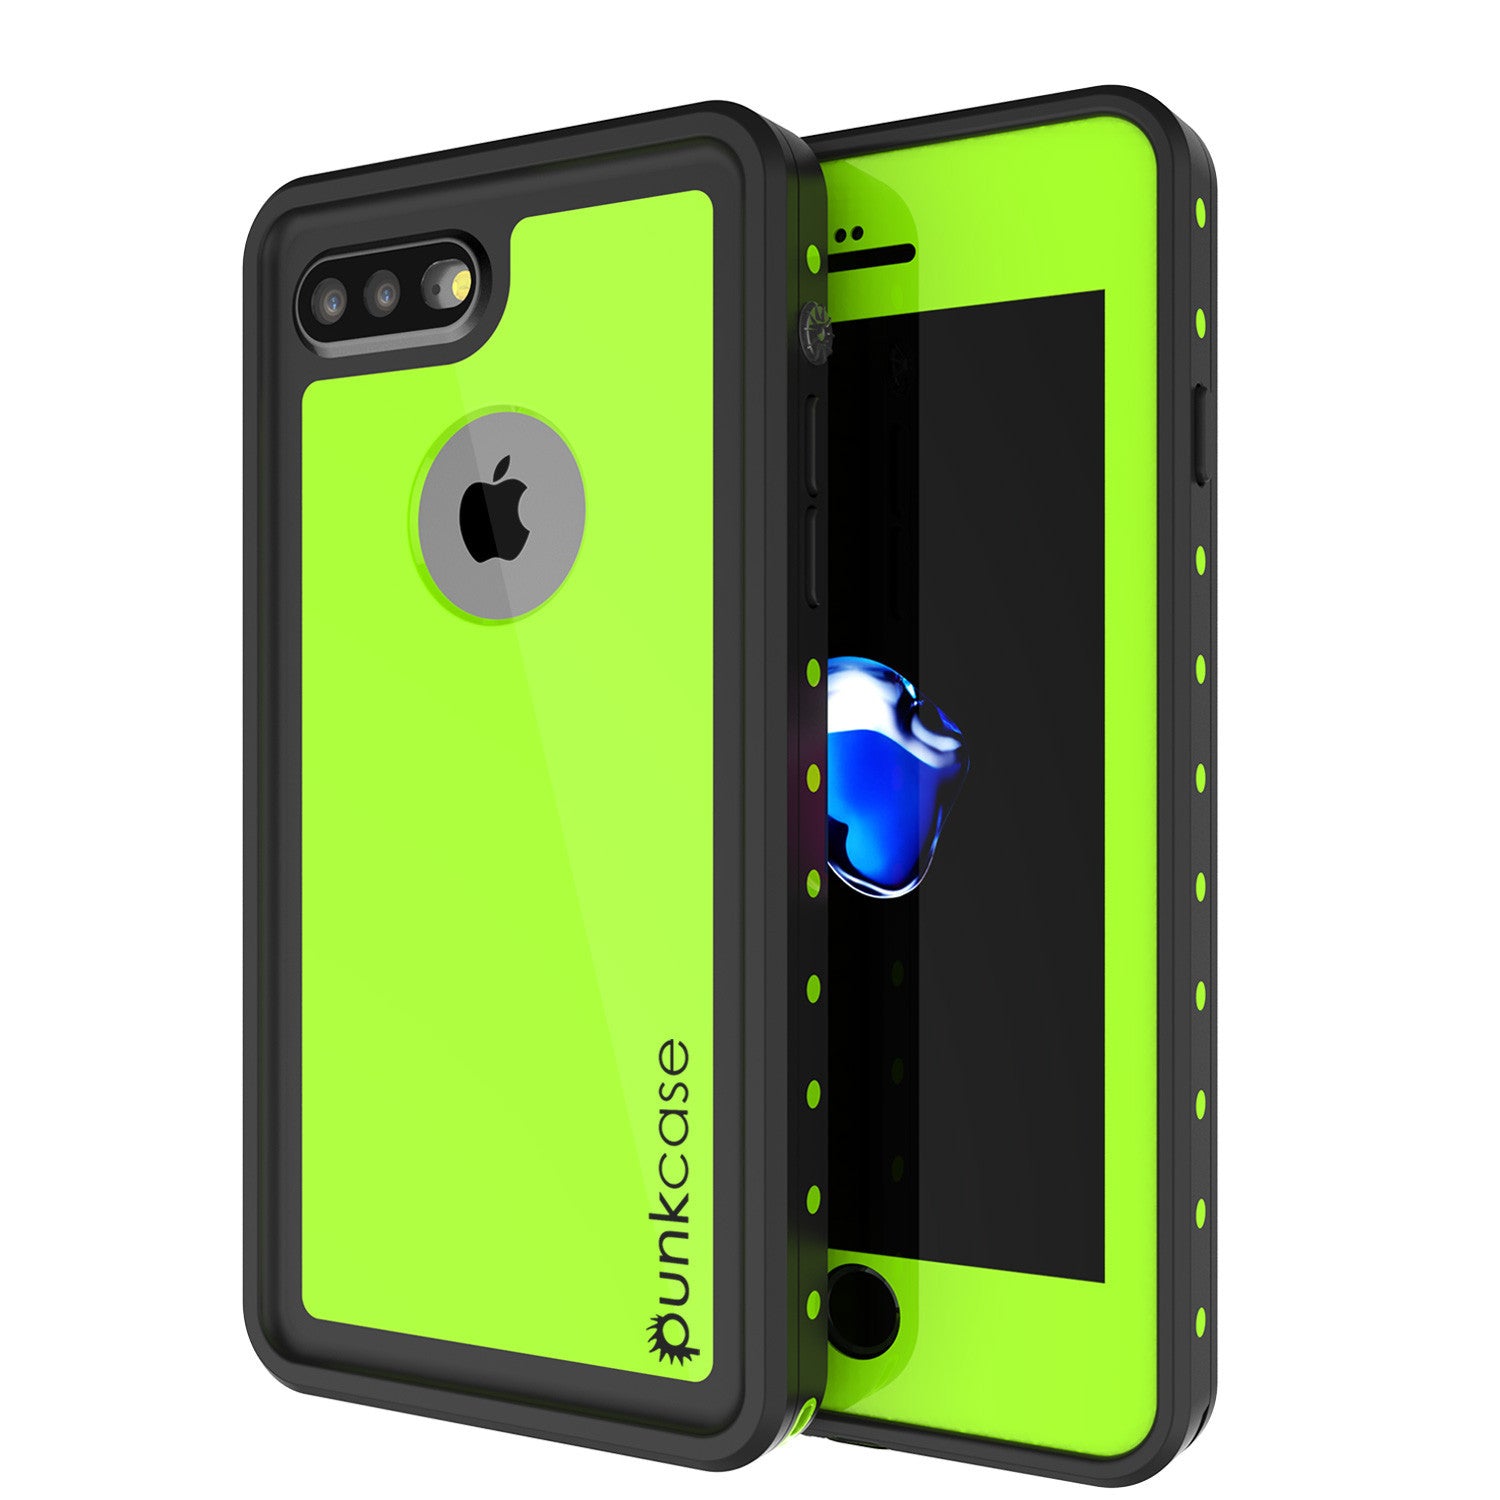 iPhone 7+ Plus Waterproof IP68 Case, Punkcase [Light Green] [StudStar Series] [Slim Fit] [Dirtproof] (Color in image: light green)